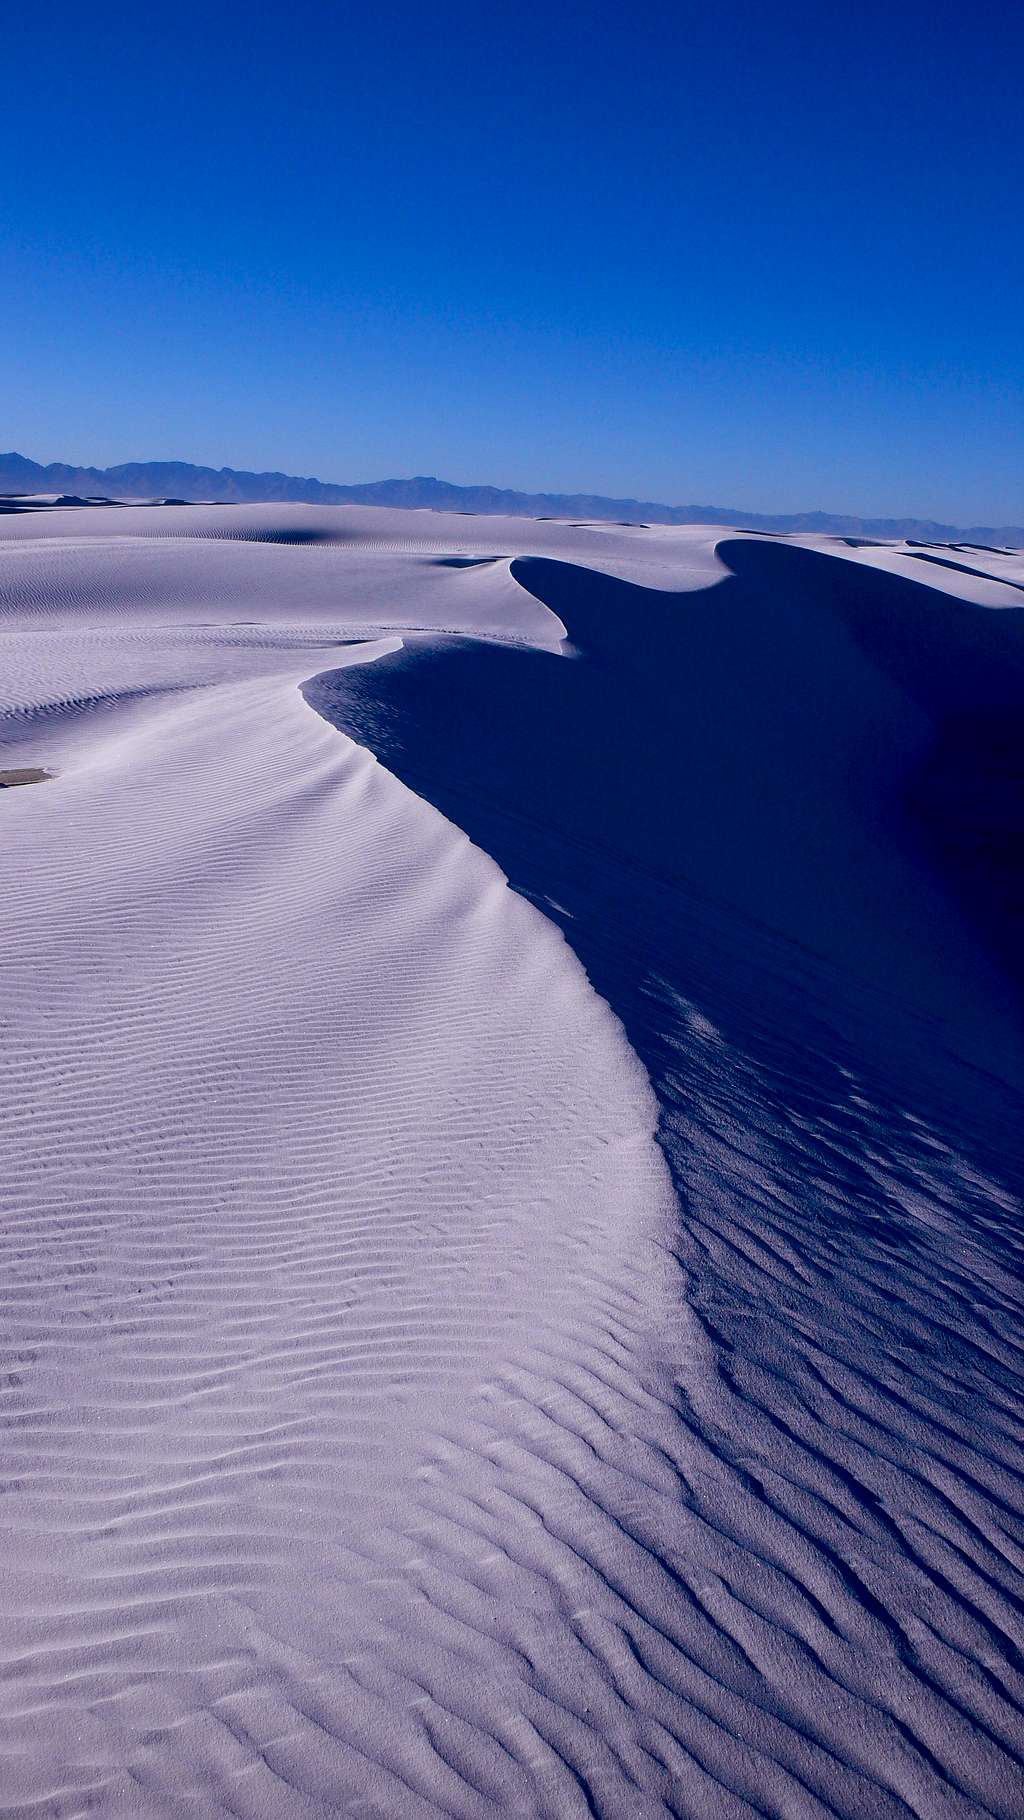 Ridge on a white sand dune